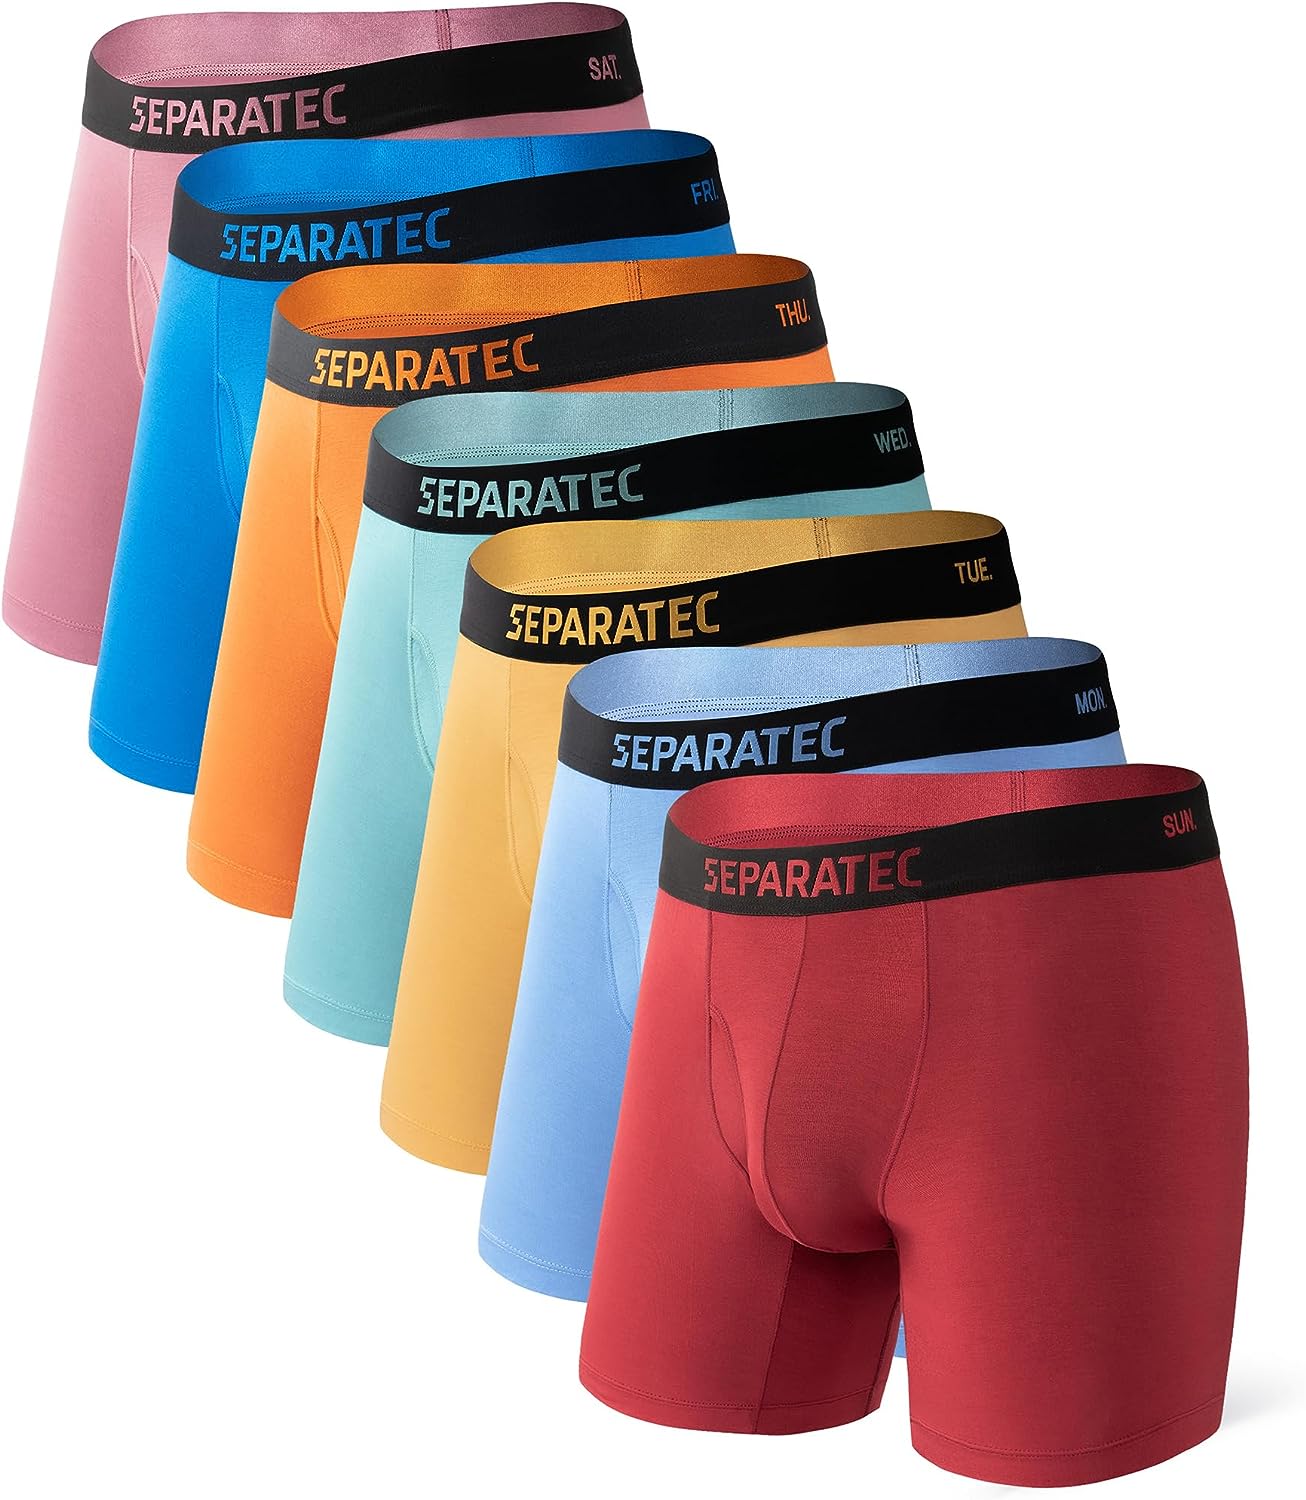 Richkeda Store Mens Separate Boxer Breathable Underwear For Men